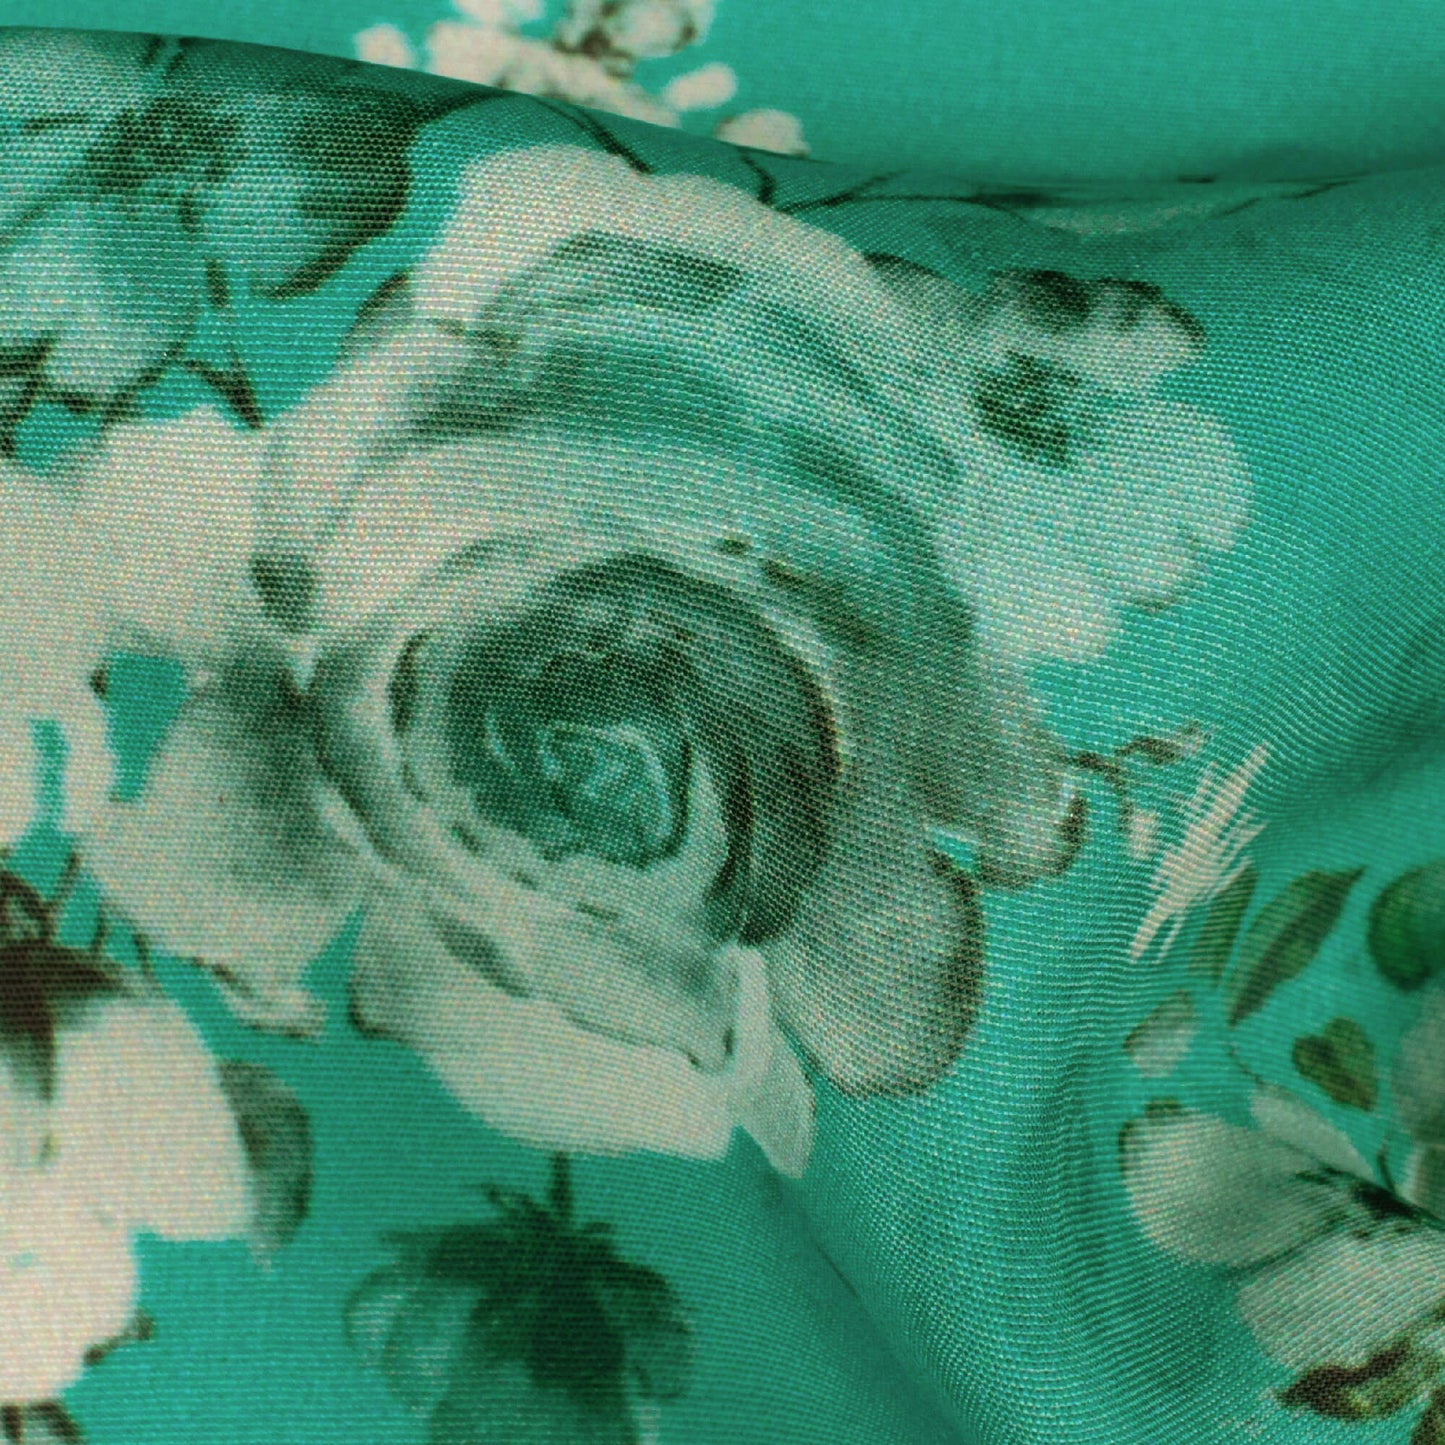 Aqua Blue And Snow White Floral Pattern Digital Print Royal BSY Crepe Fabric